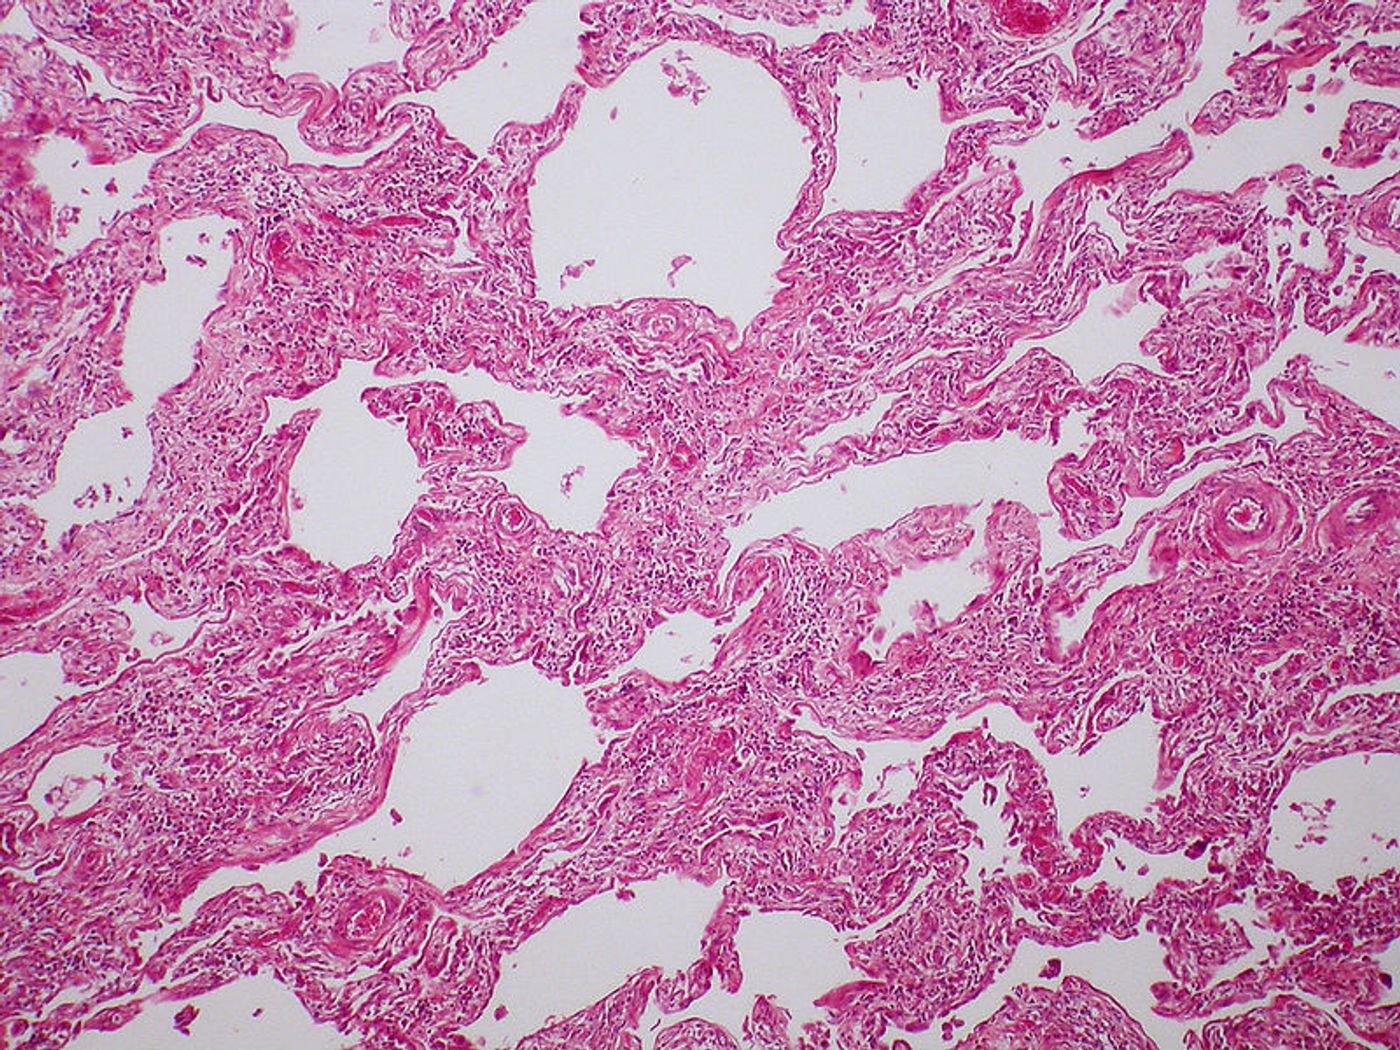  Interstitial pulmonary fibrosis in Scleroderma. Credit: Yale Rosen